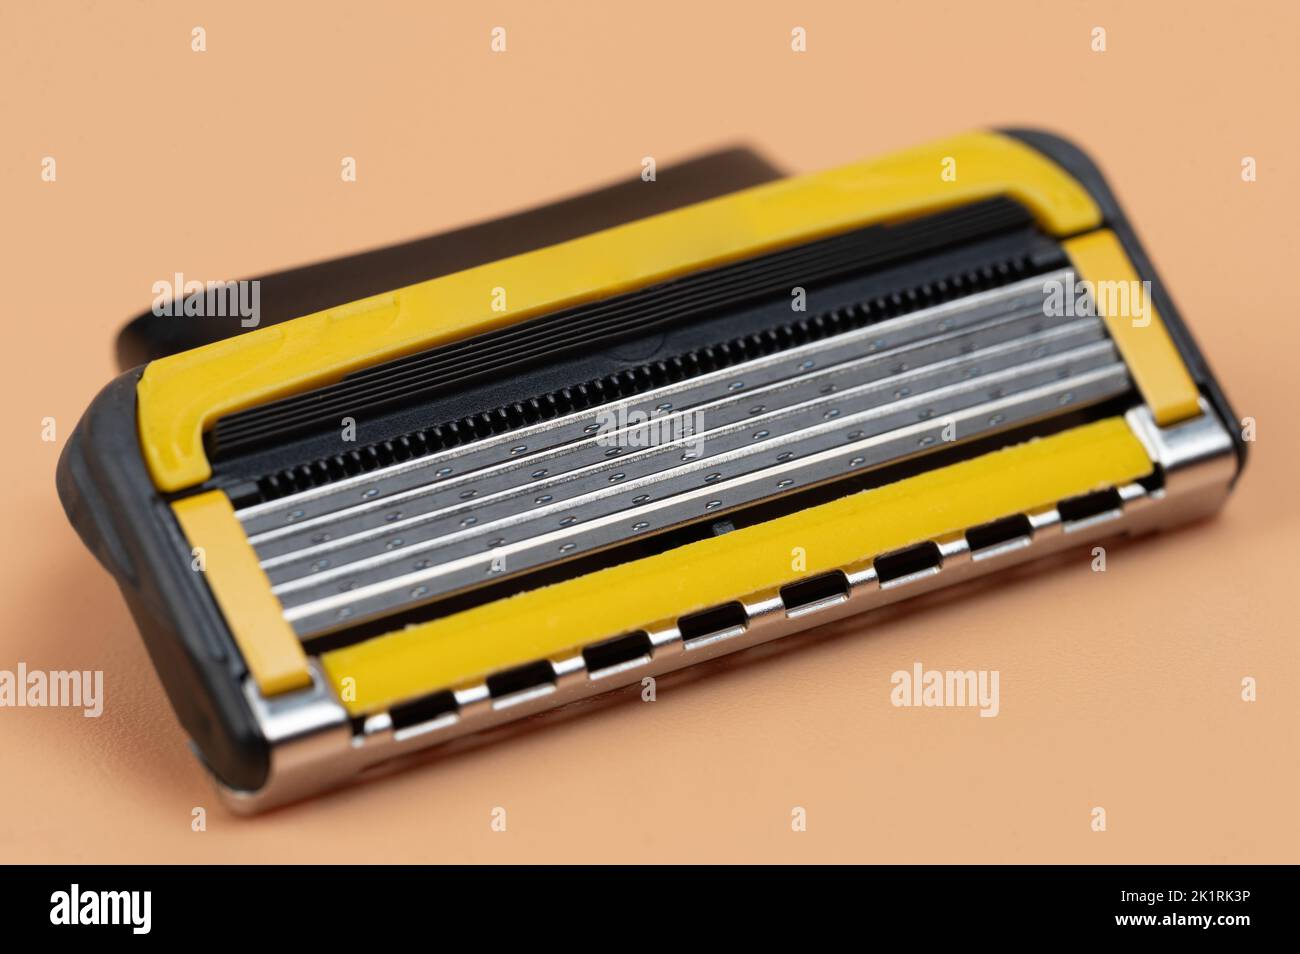 Sharp razor blade cassette  macro close up view on brown background Stock Photo